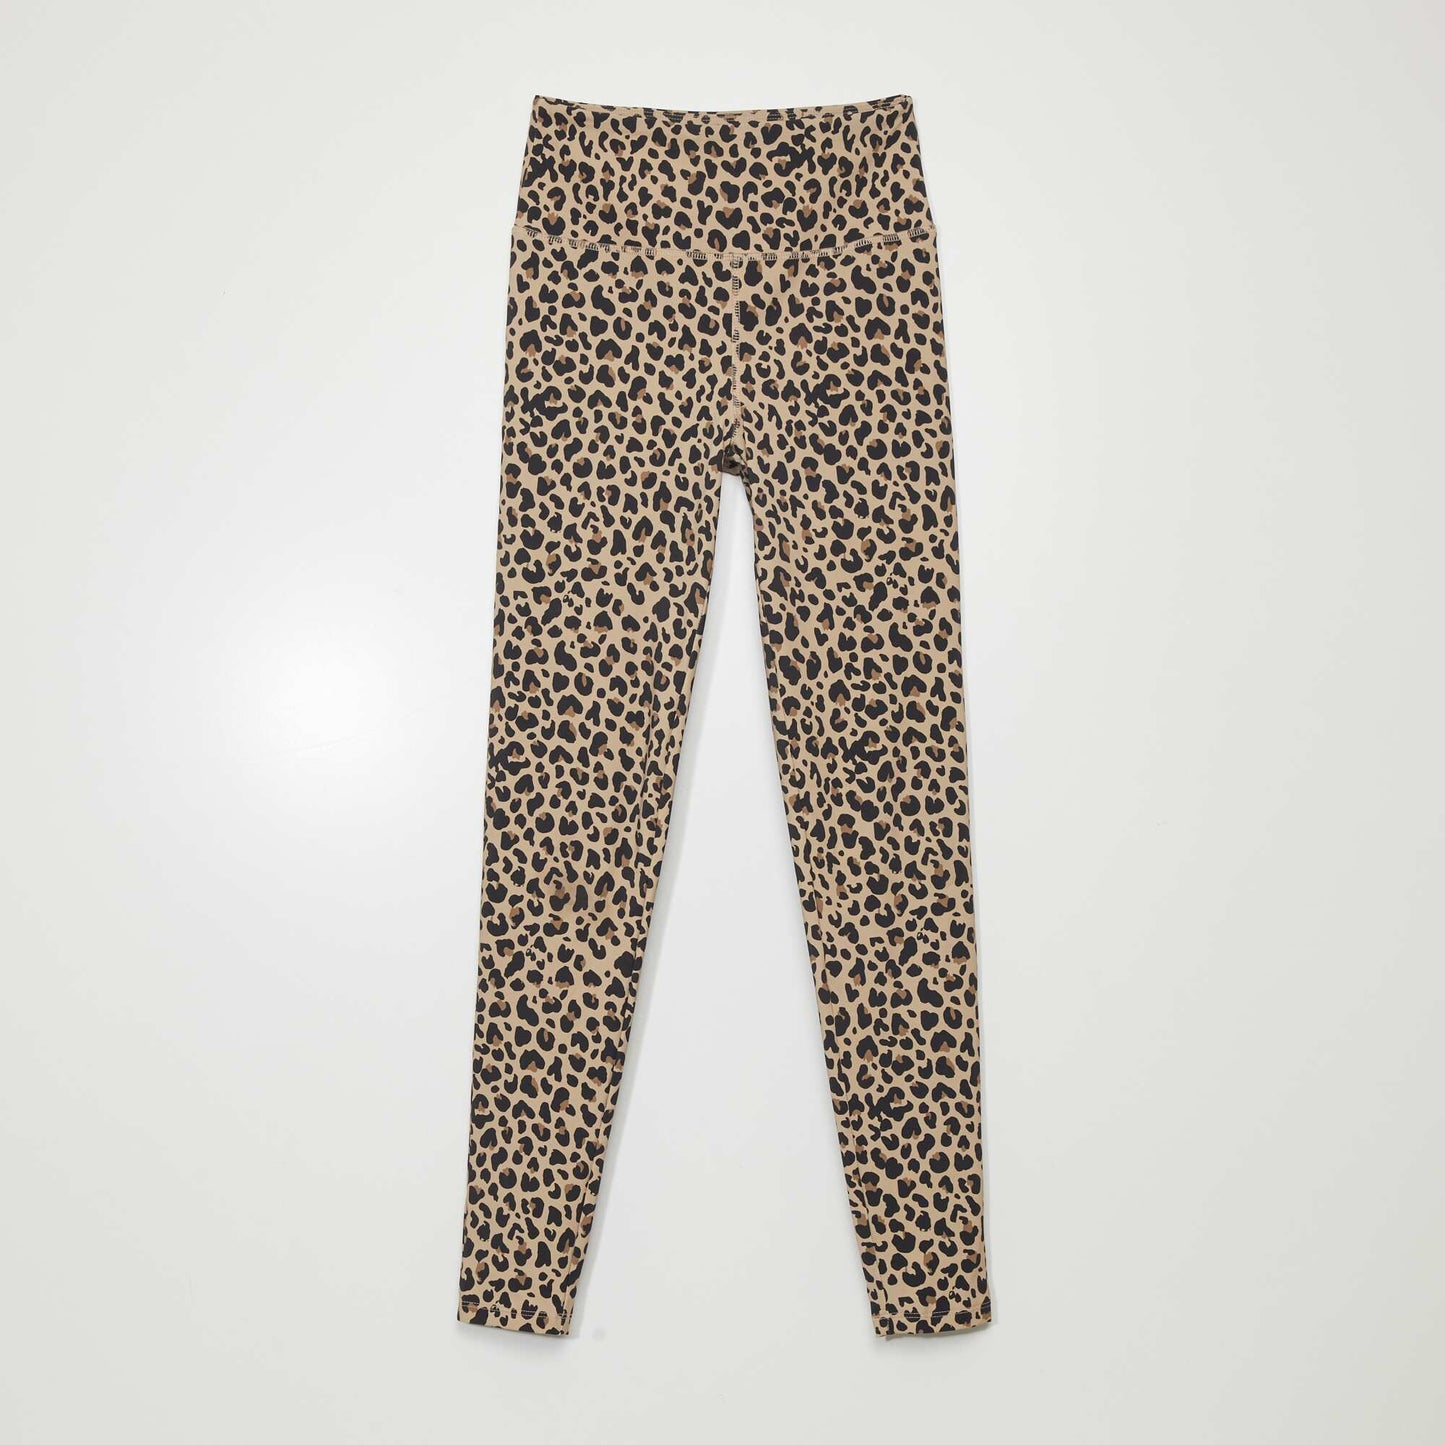 Leopard print leggings BROWN